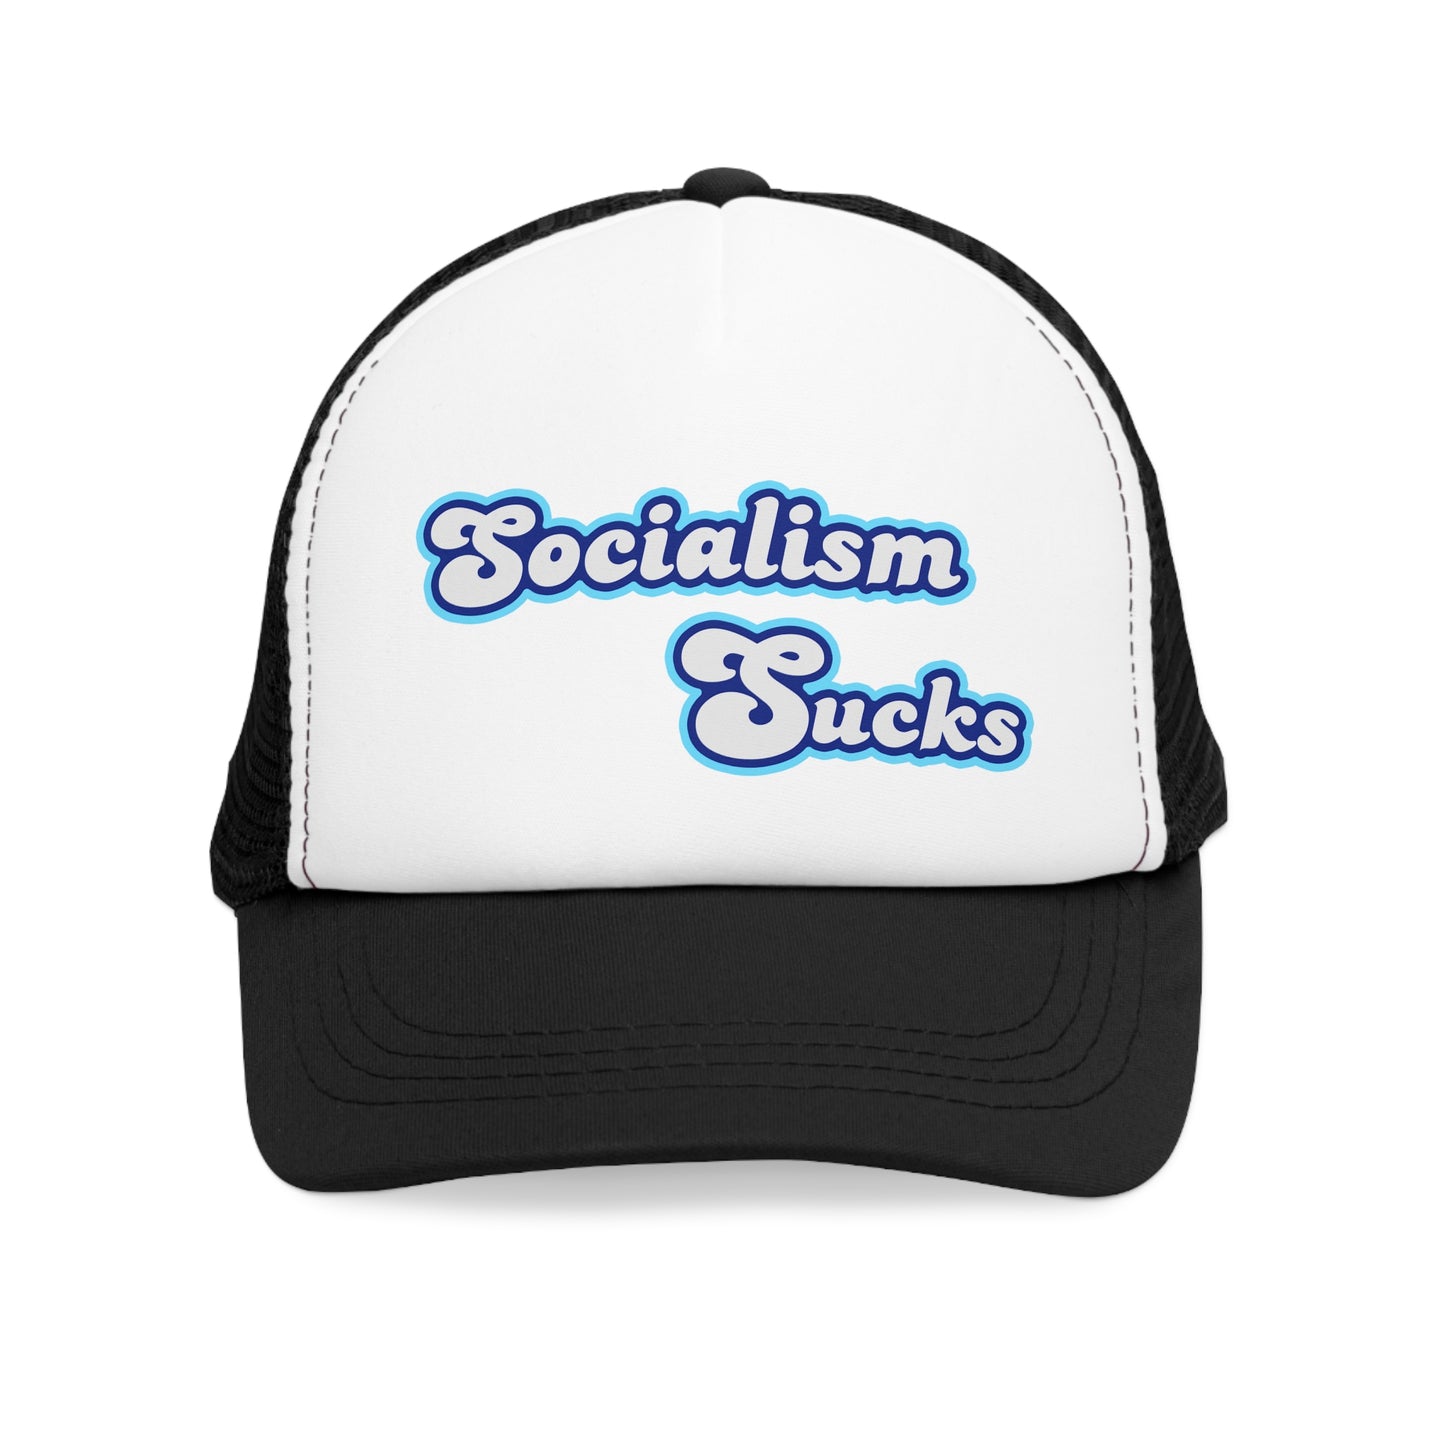 Socialism Sucks Mesh Cap